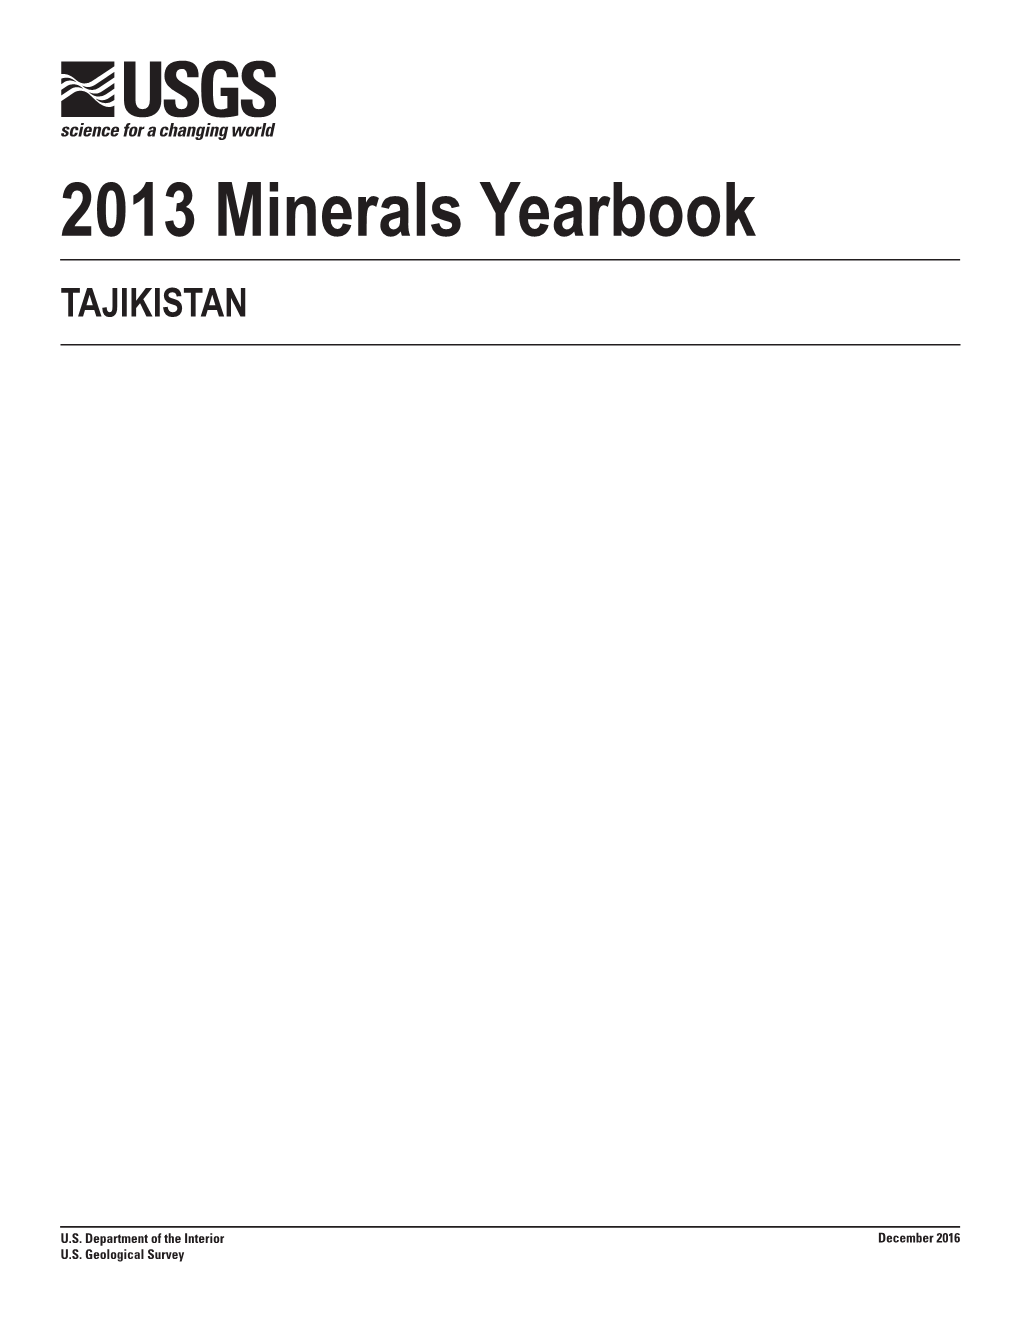 The Mineral Industry of Tajikistan in 2013